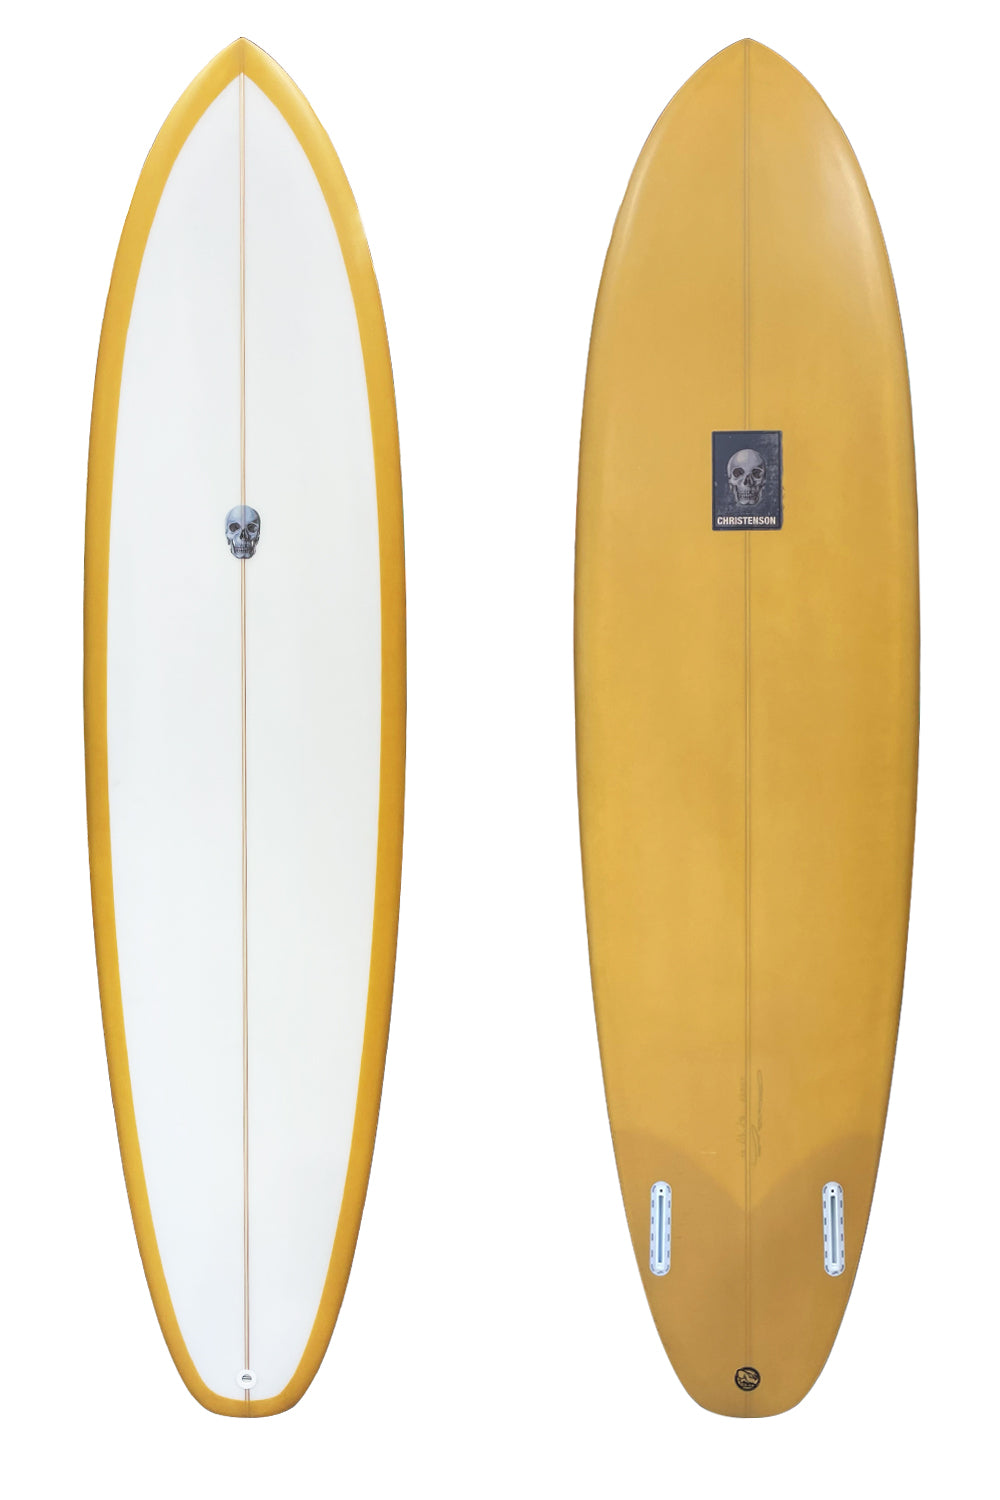 Chris Christenson Twin Tracker Surfboard